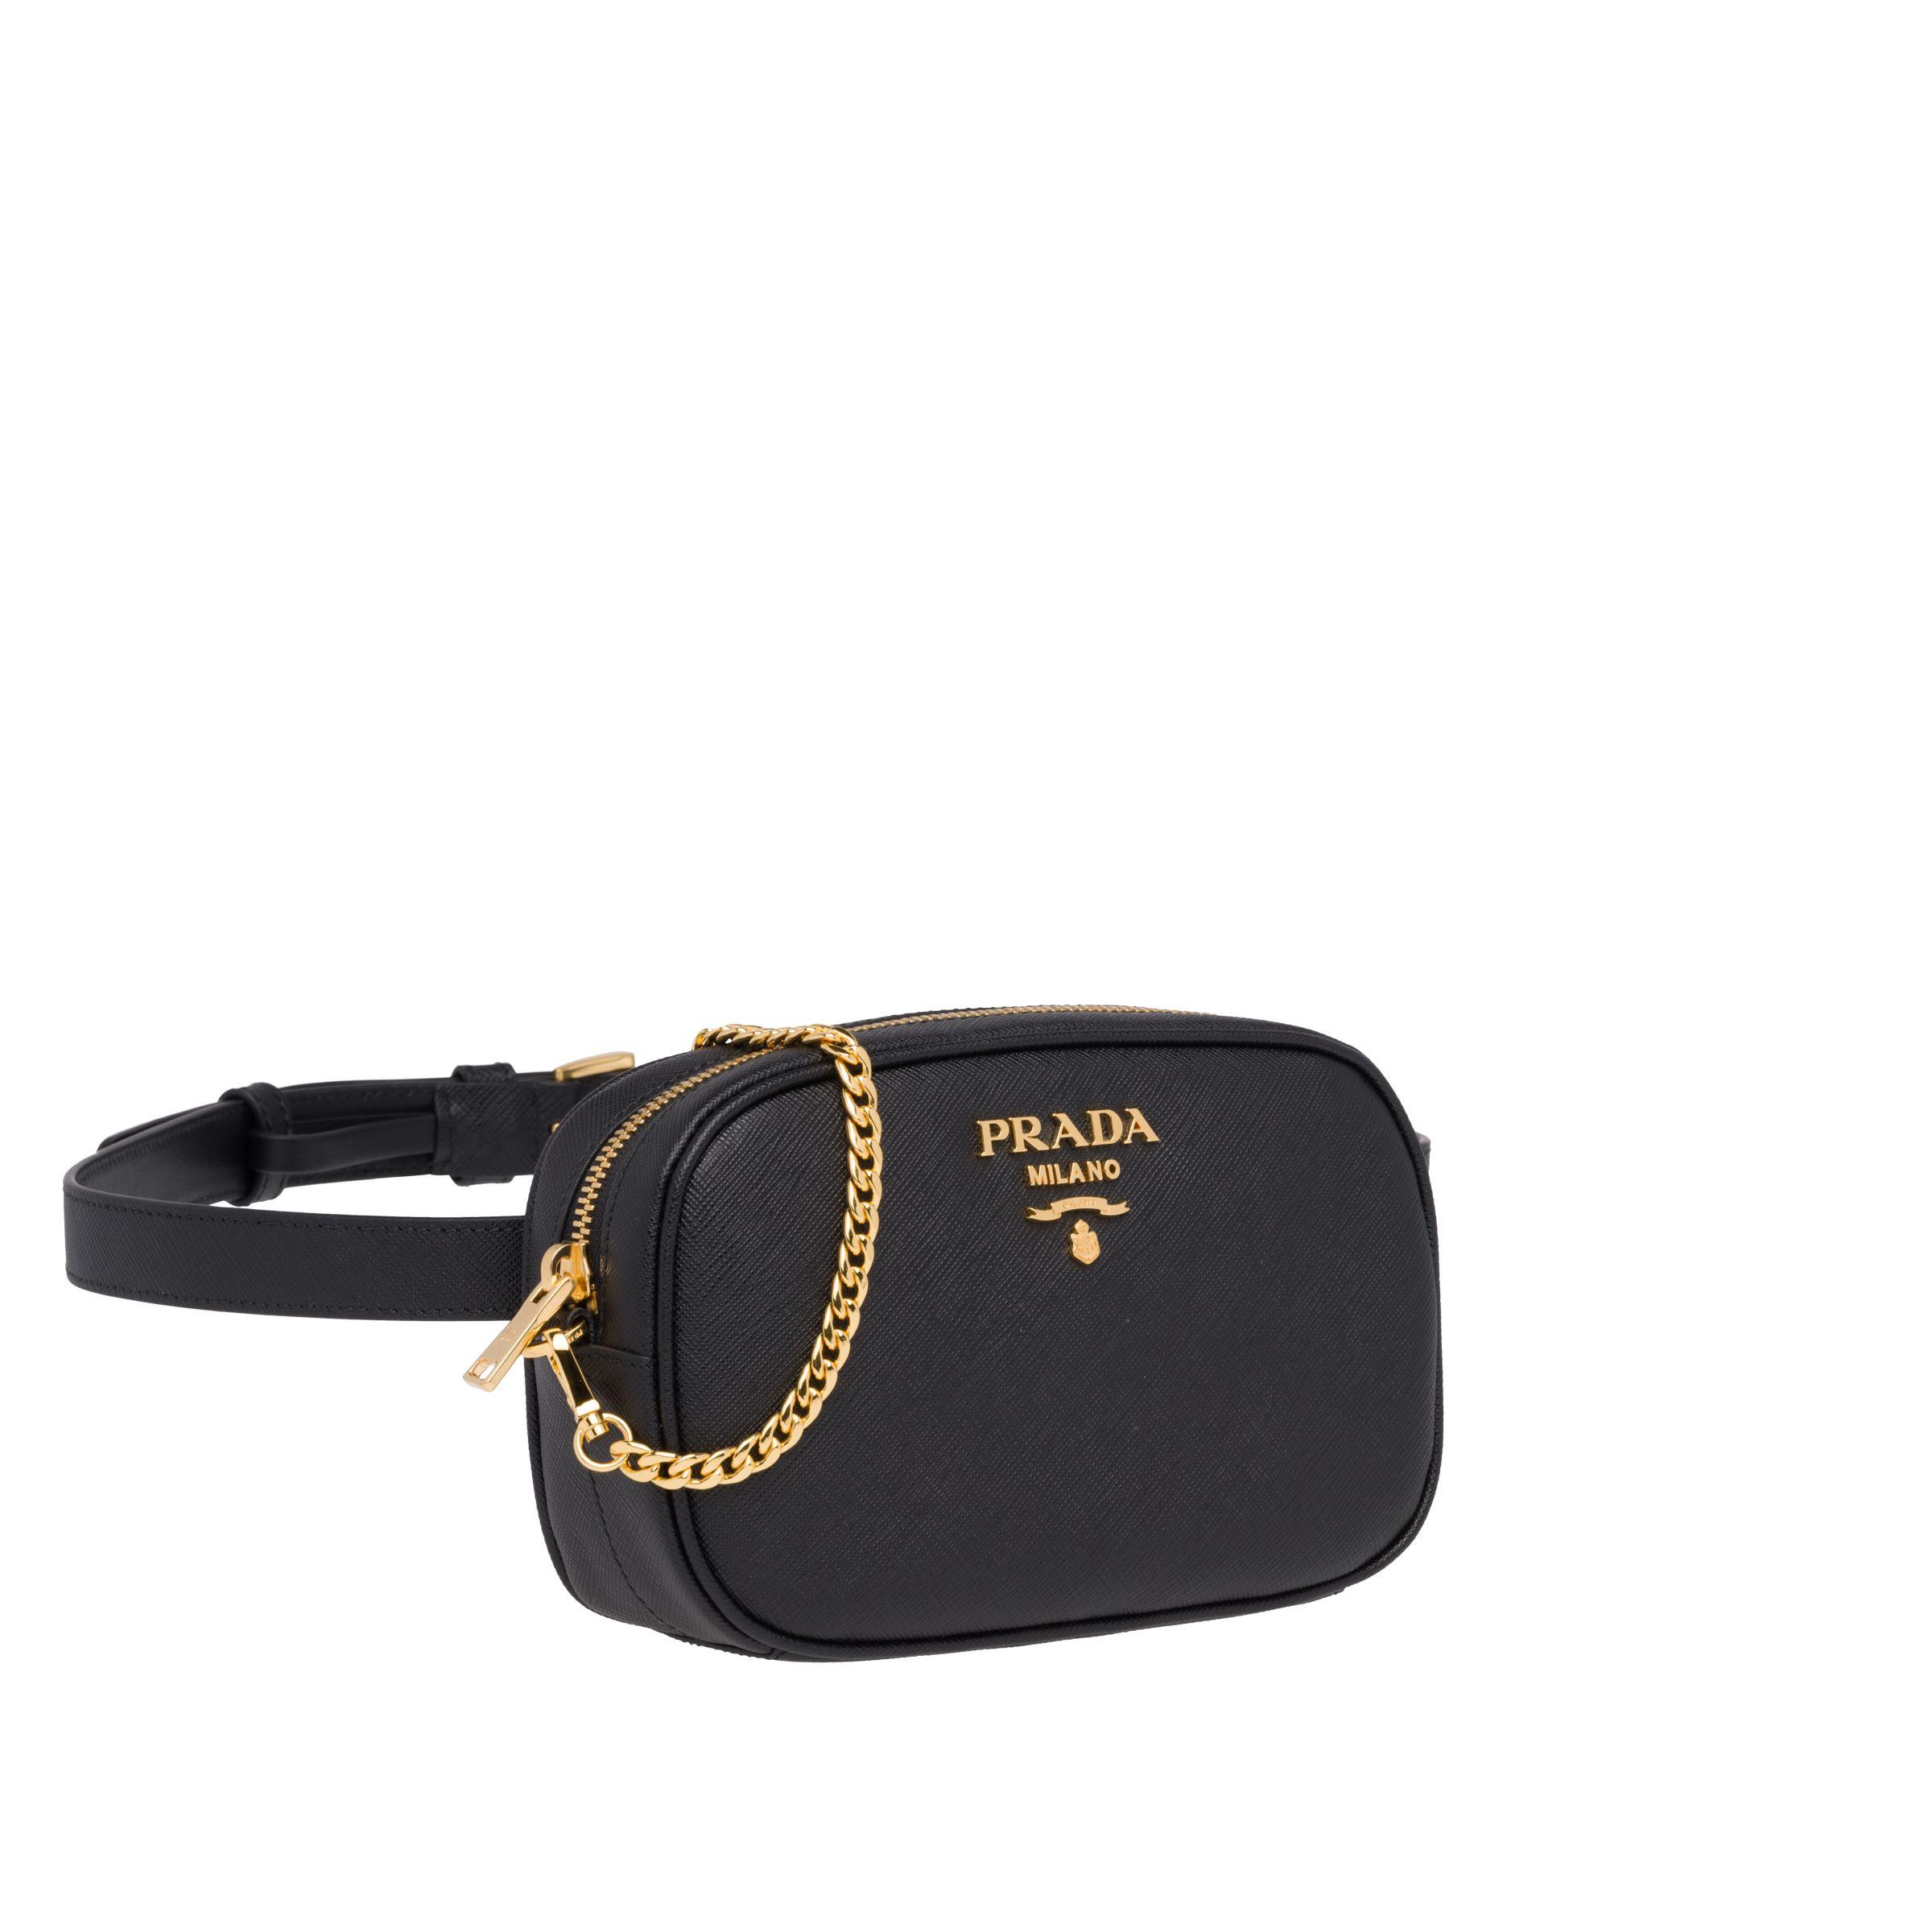 Prada Saffiano Leather Belt Bag in Nero (Black) | Lyst